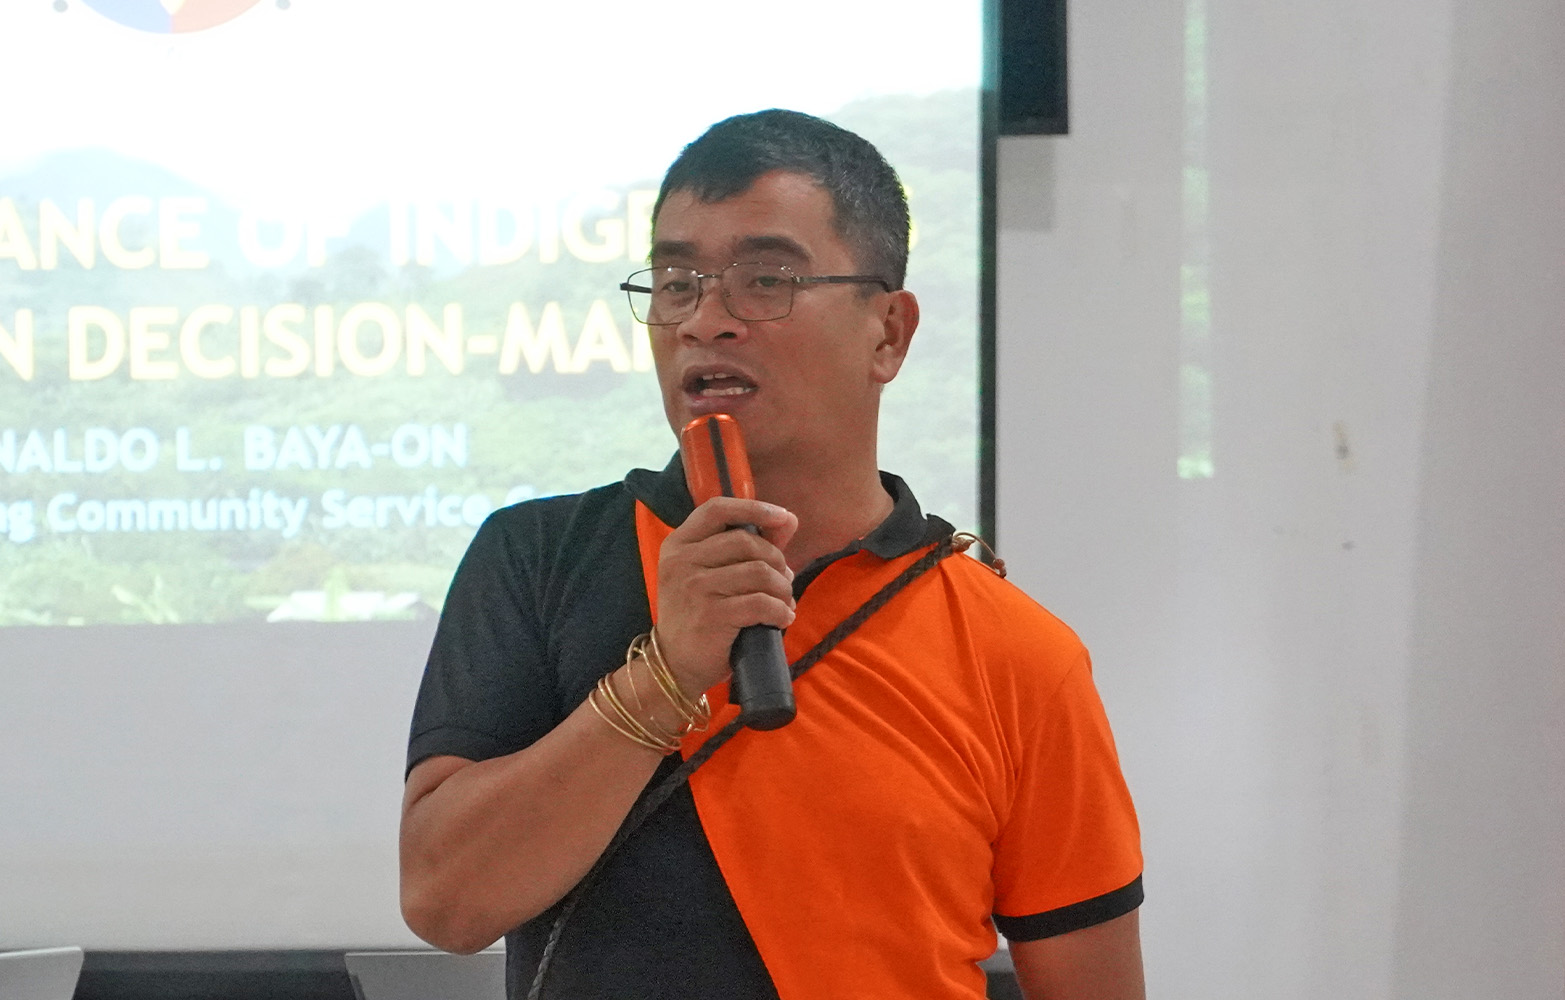 Ronaldo L. Baya-on, chief of the community service center in Talakag, Bukidnon